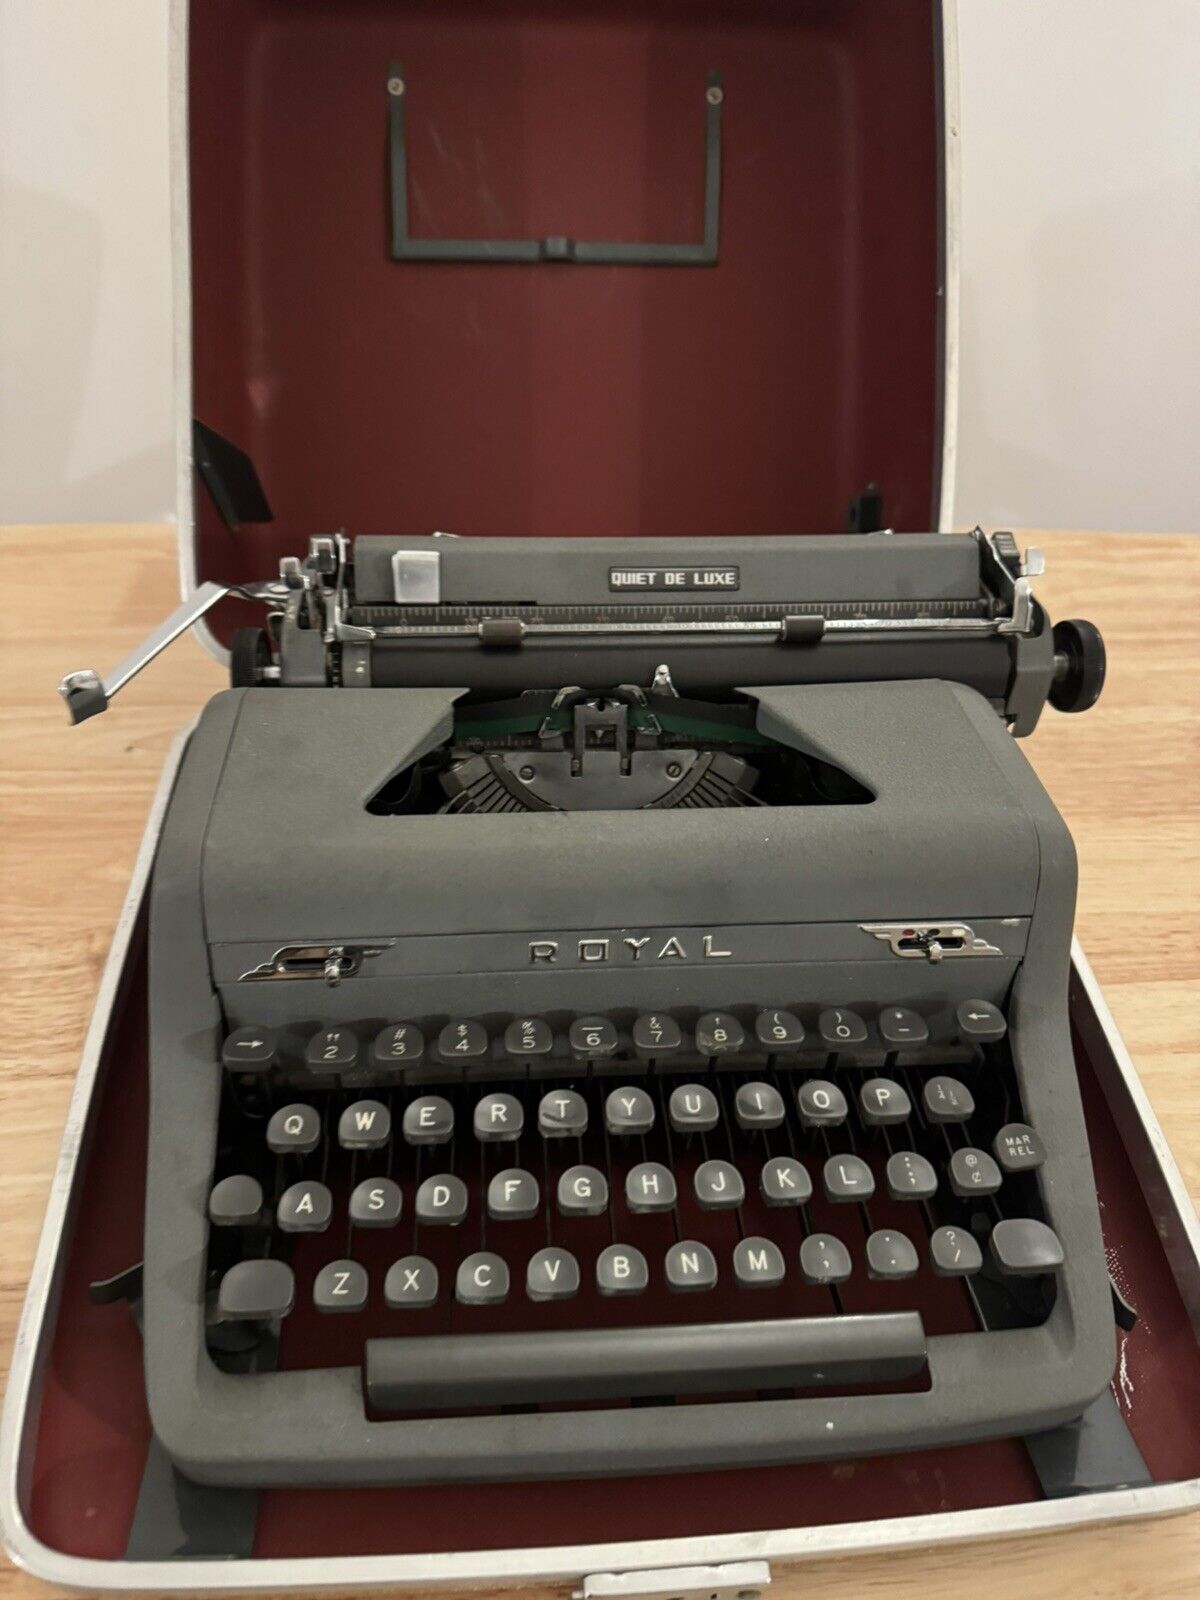 Vintage 1940's Royal Quiet De Luxe Typewriter & Portable Case Serial #A-1707368